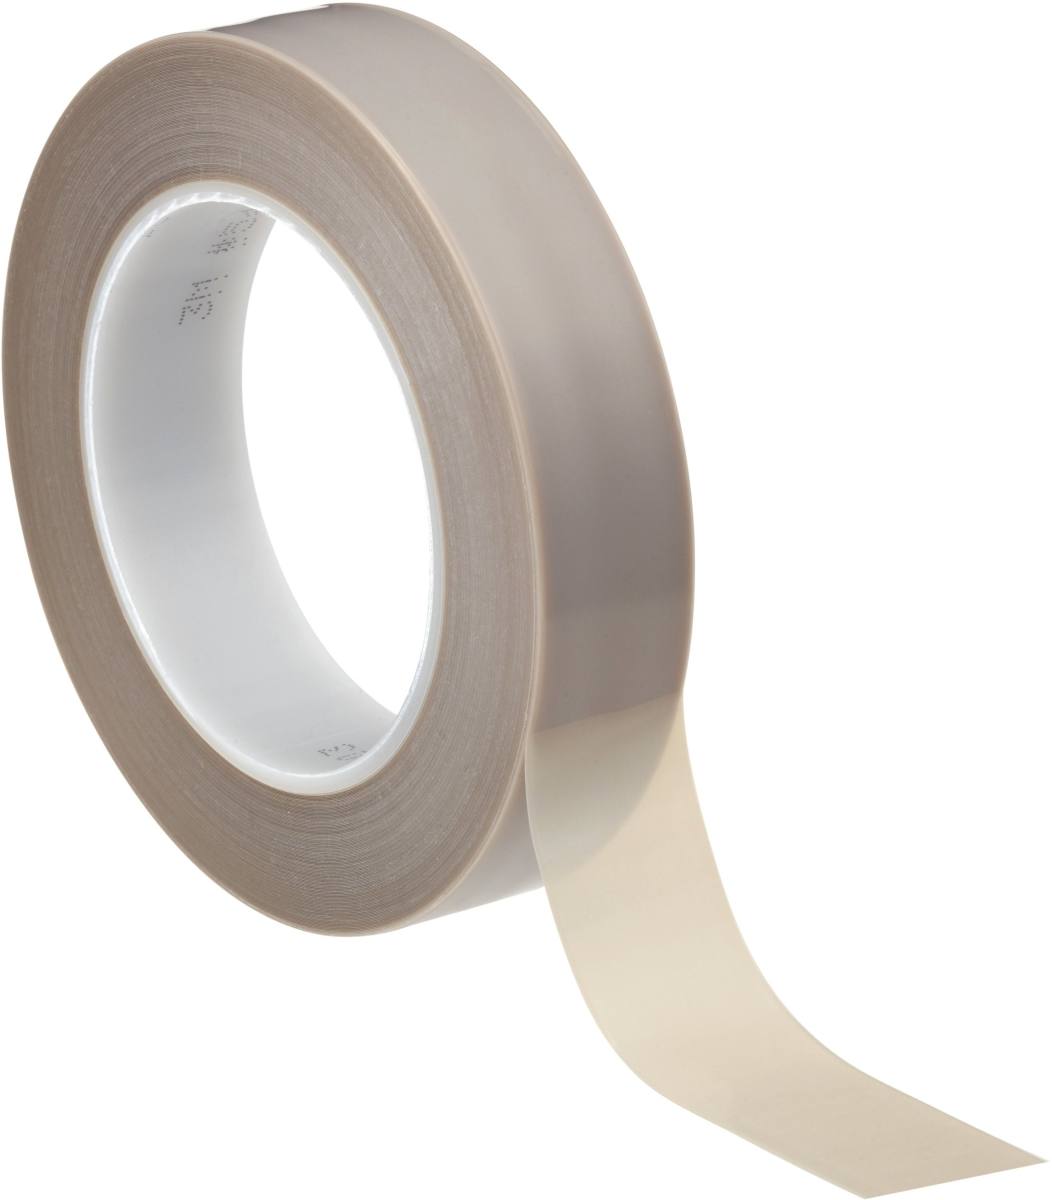 3M 5480 PTFE film adhesive tape 15mmx33m, 0.10mm, silicone